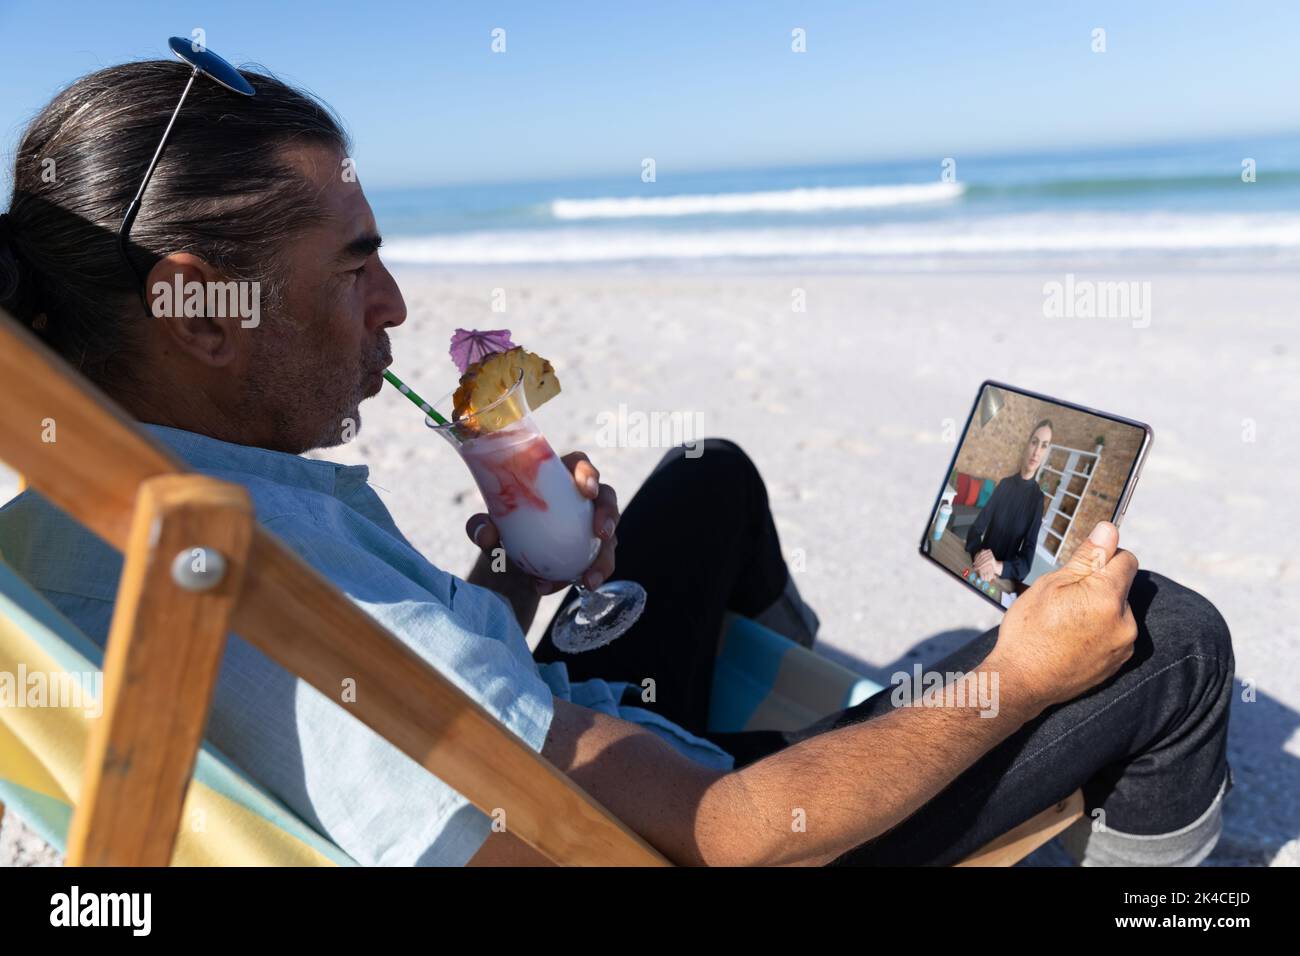 https://c8.alamy.com/comp/2K4CEJD/caucasian-man-relaxing-on-beach-with-drink-having-video-call-using-tablet-digital-nomad-on-summer-beach-holiday-2K4CEJD.jpg